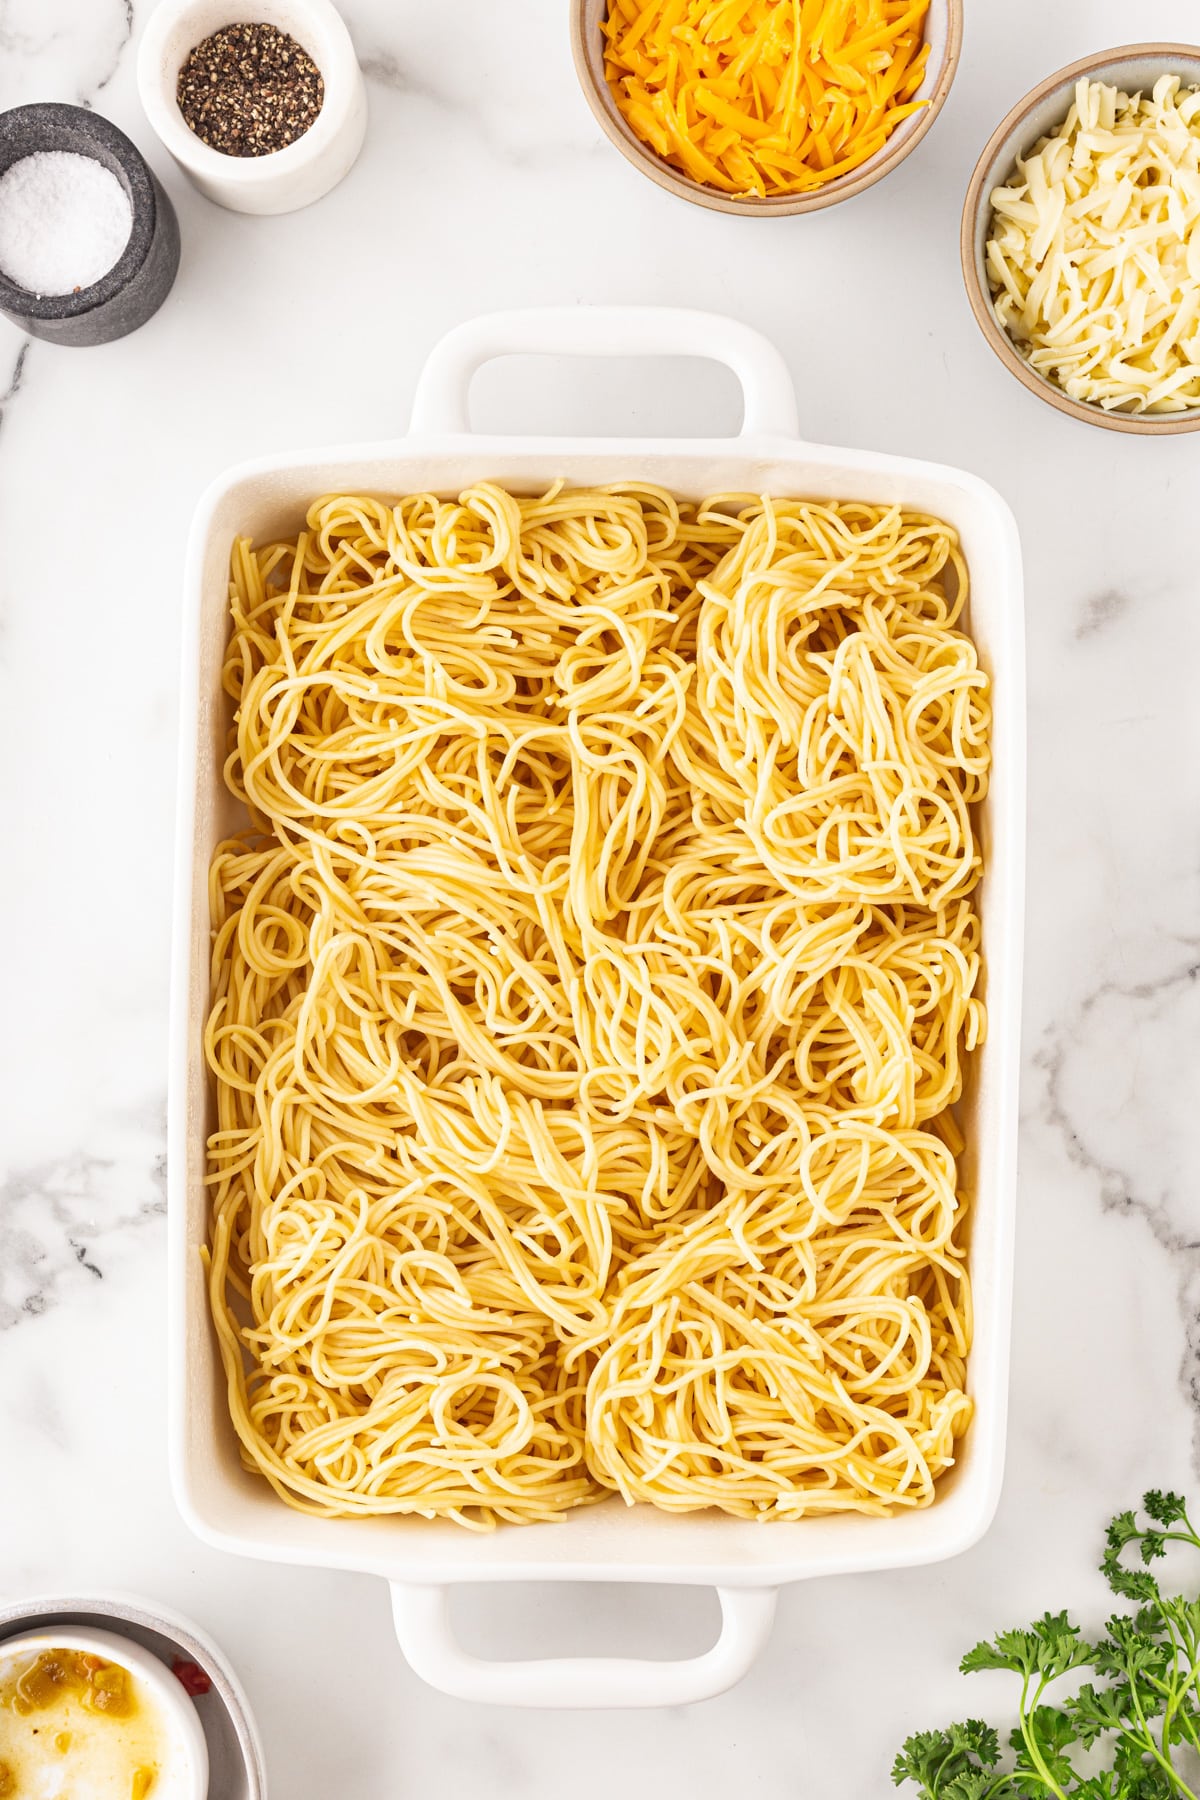 Spaghetti added to a casserole dish. 